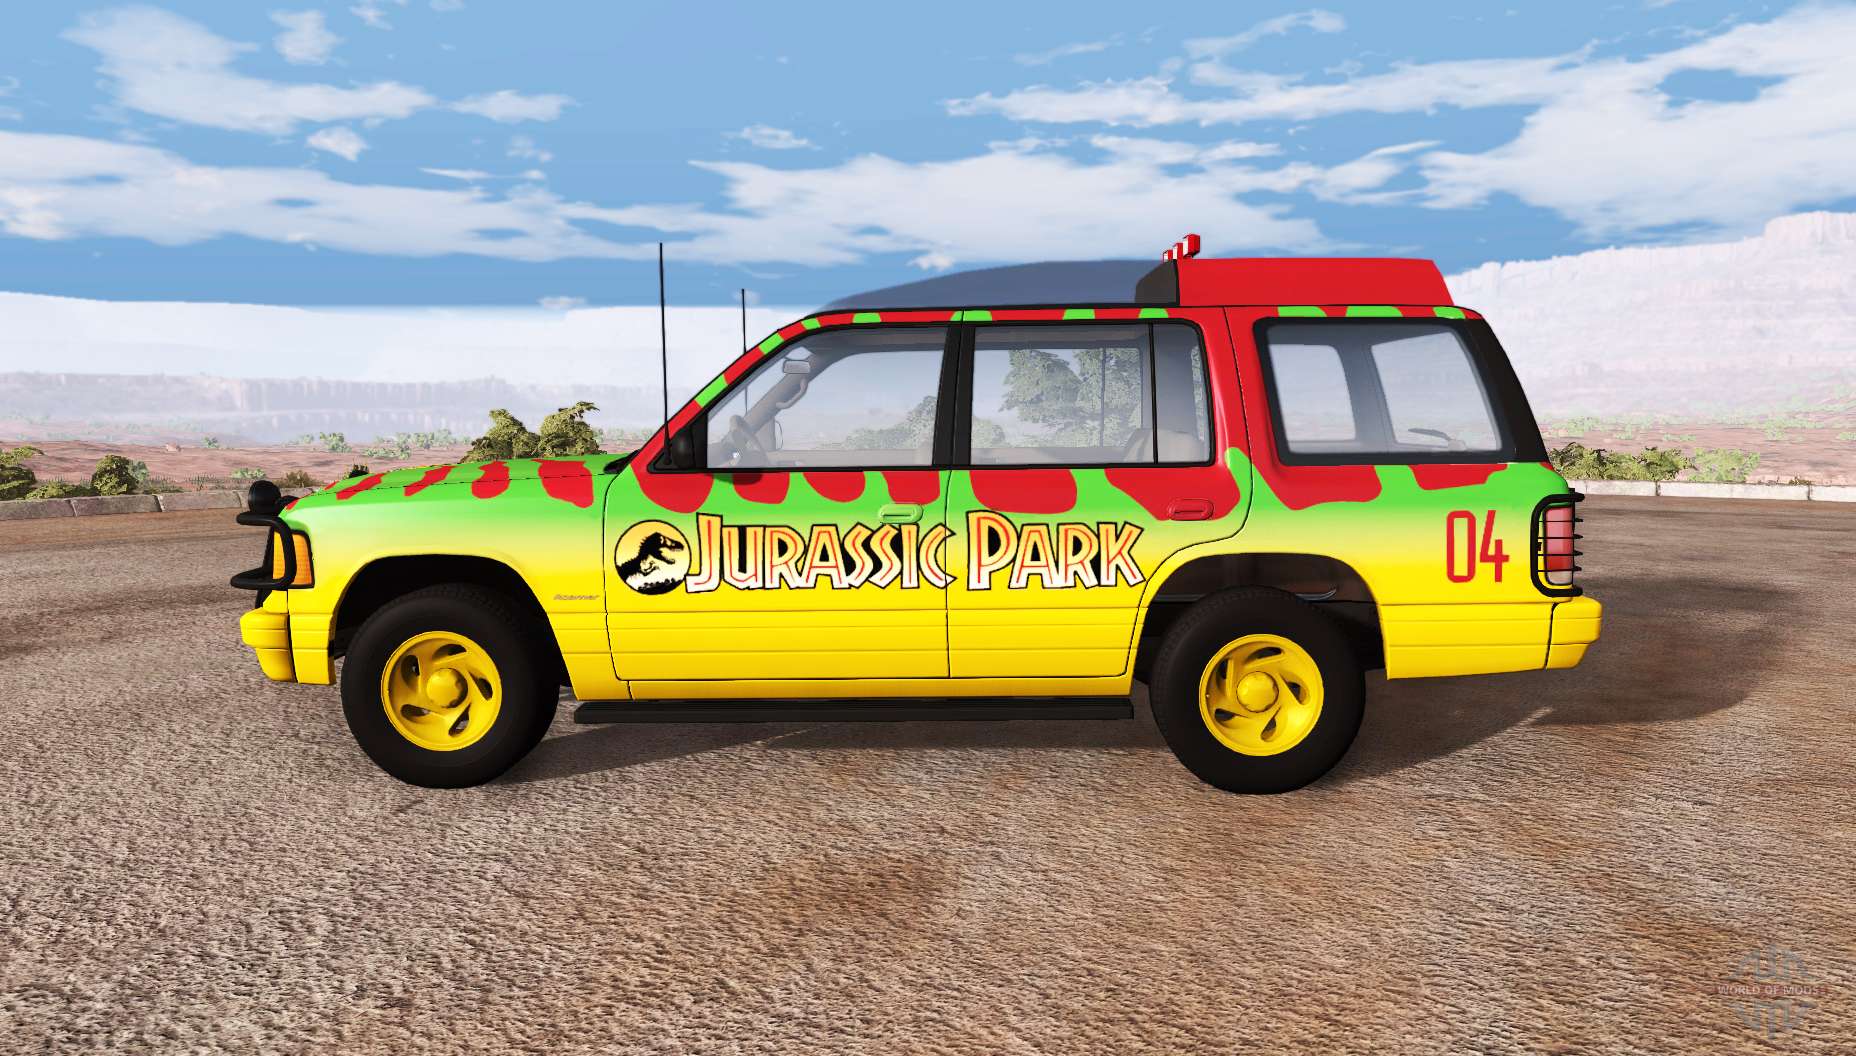 Gavril Roamer Tour Car Jurassic Park para BeamNG Drive